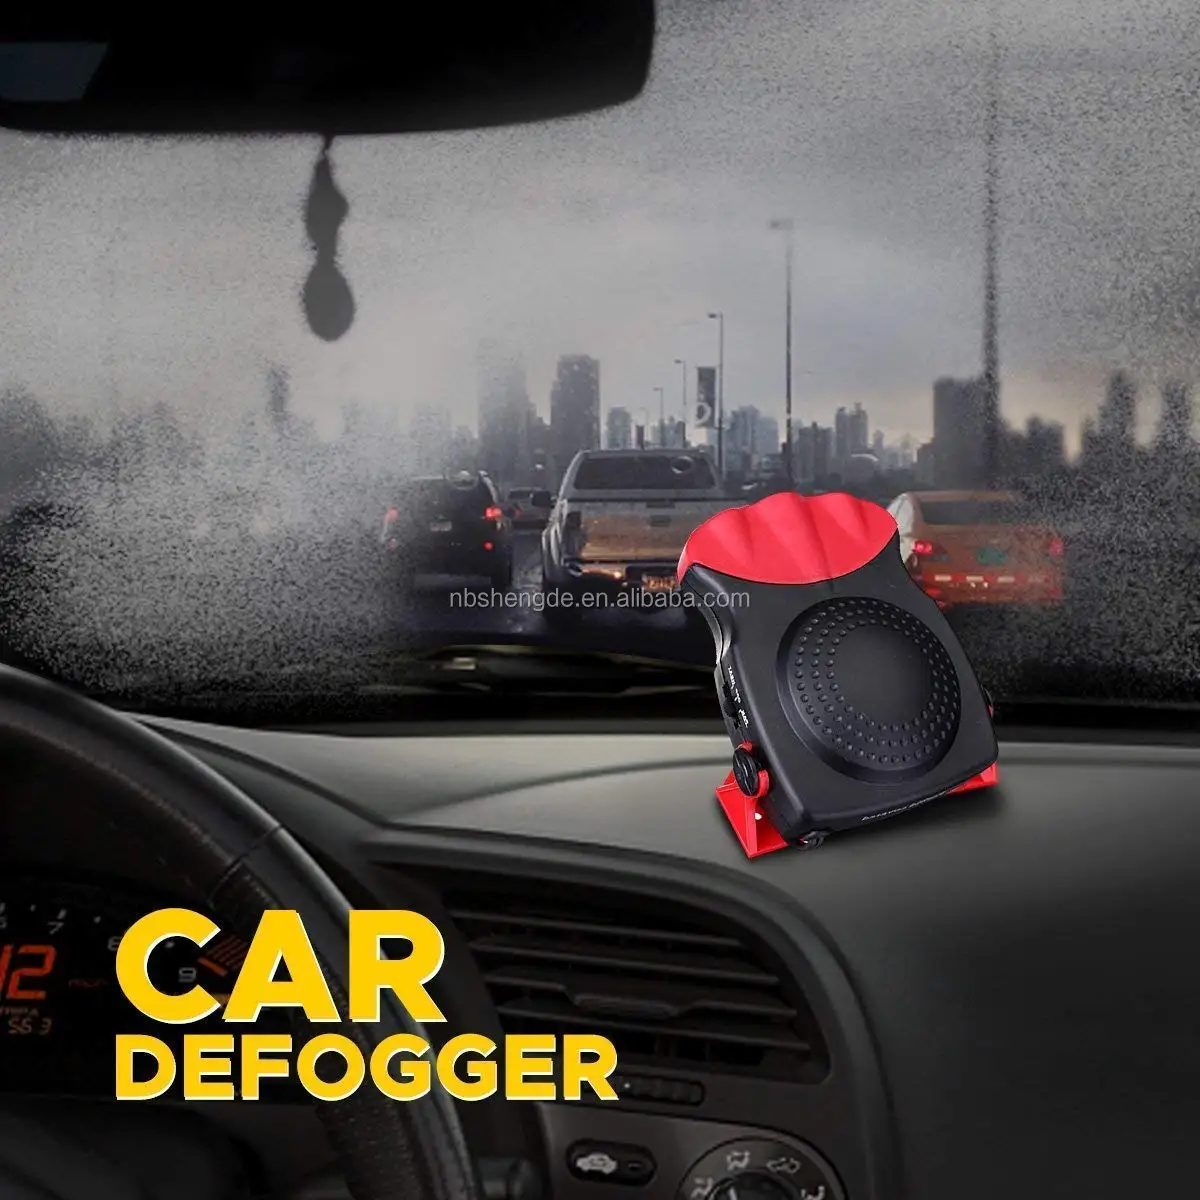 Defogger in Car - How to Use Defogger in Car?